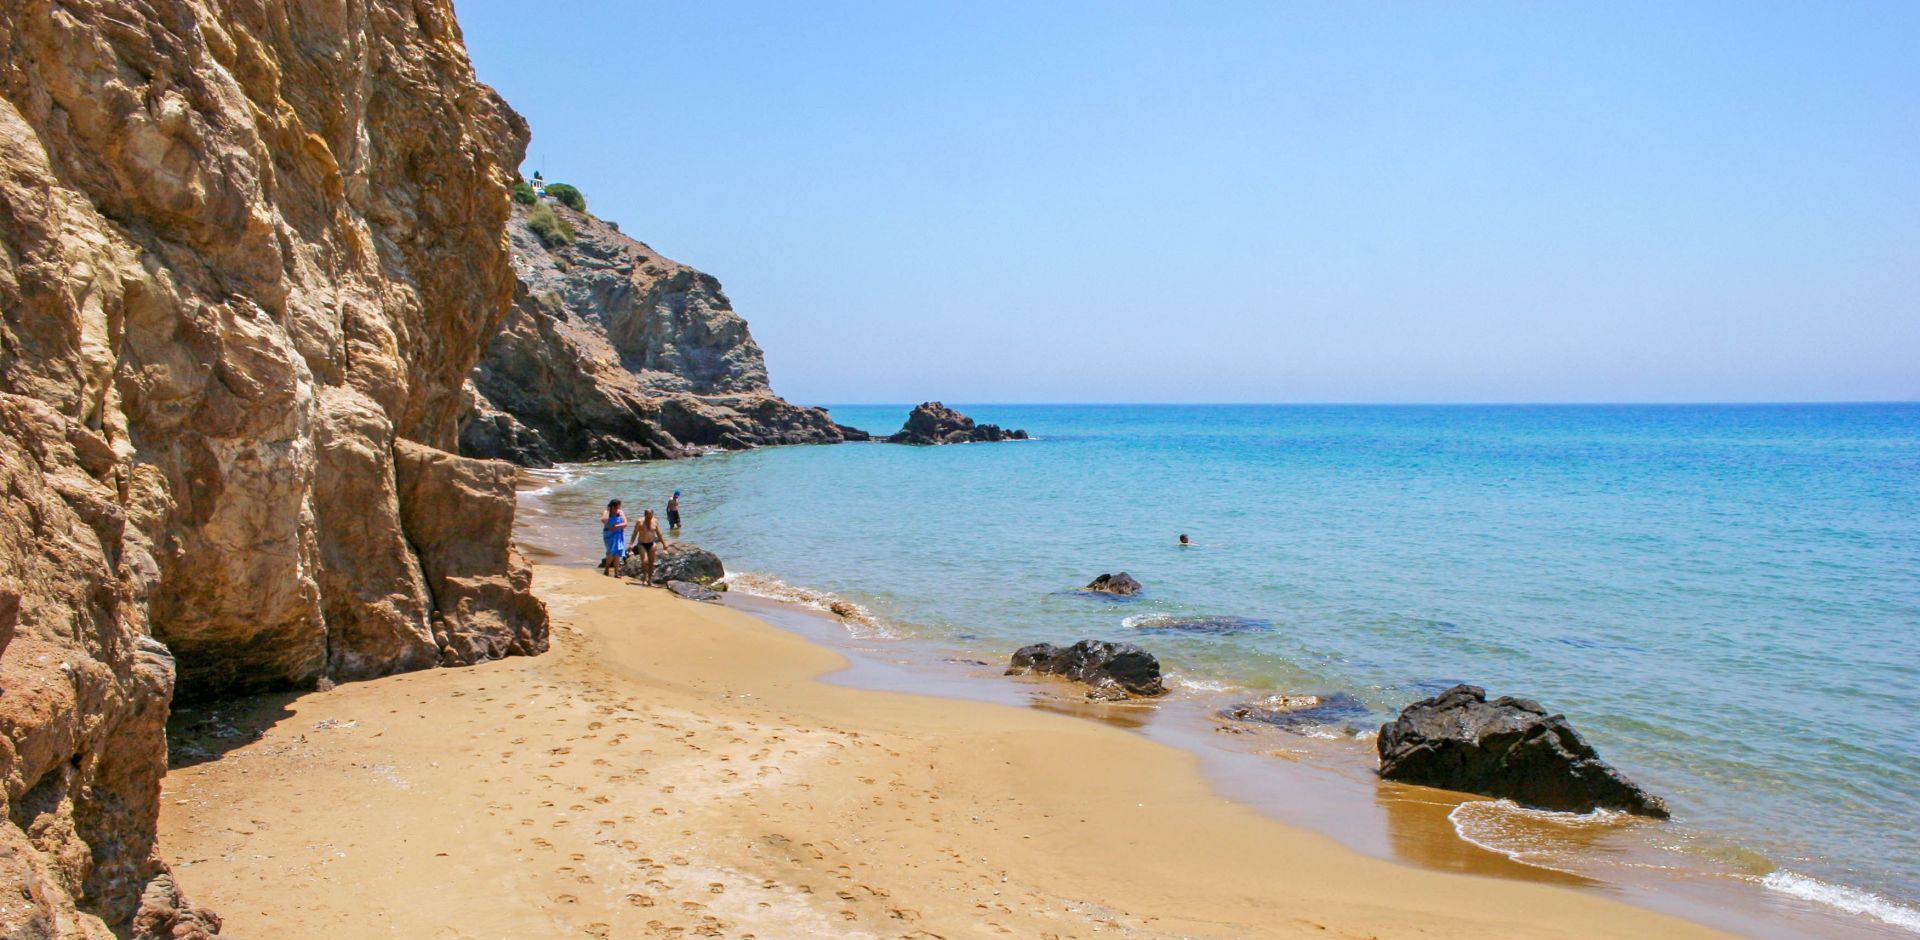 Anafi Greece: Your Travel Guide to this Idyllic Greek Island